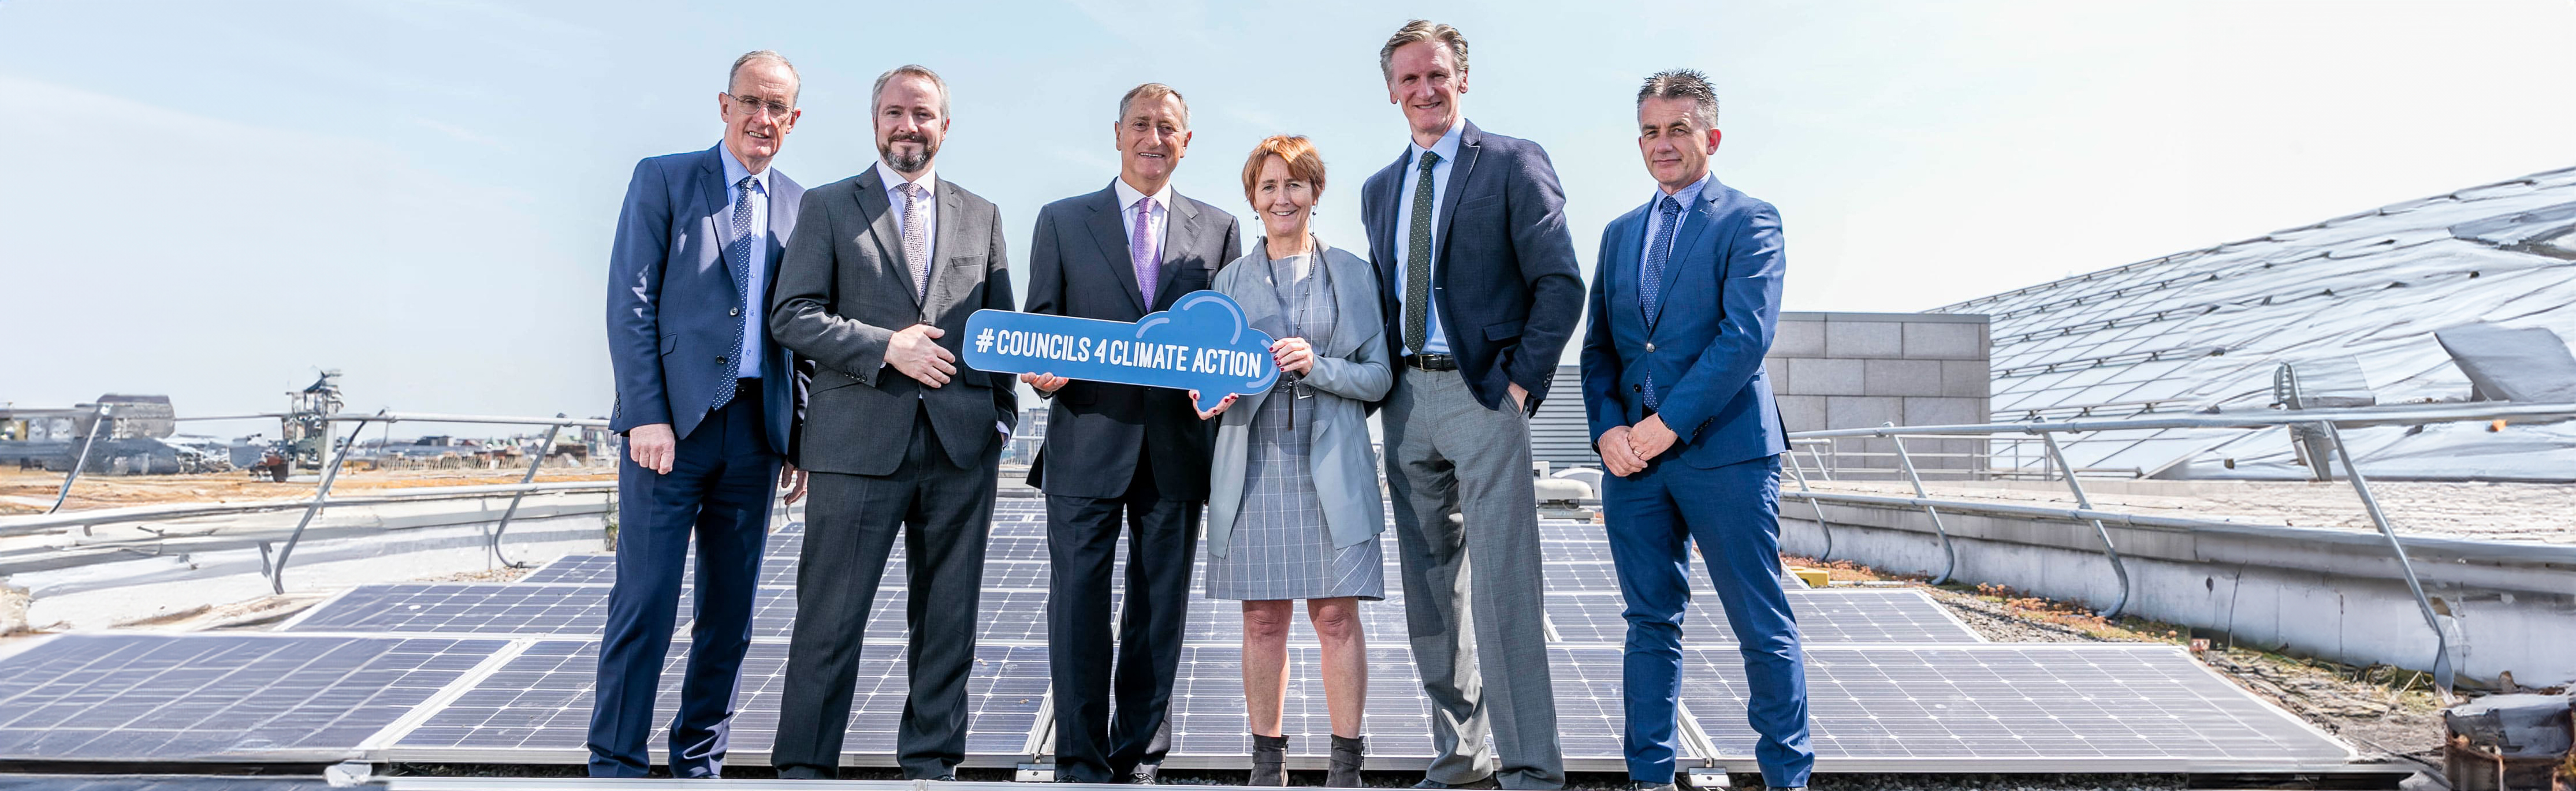 Dublin City Council sustainability team beside new rooftop solar panels